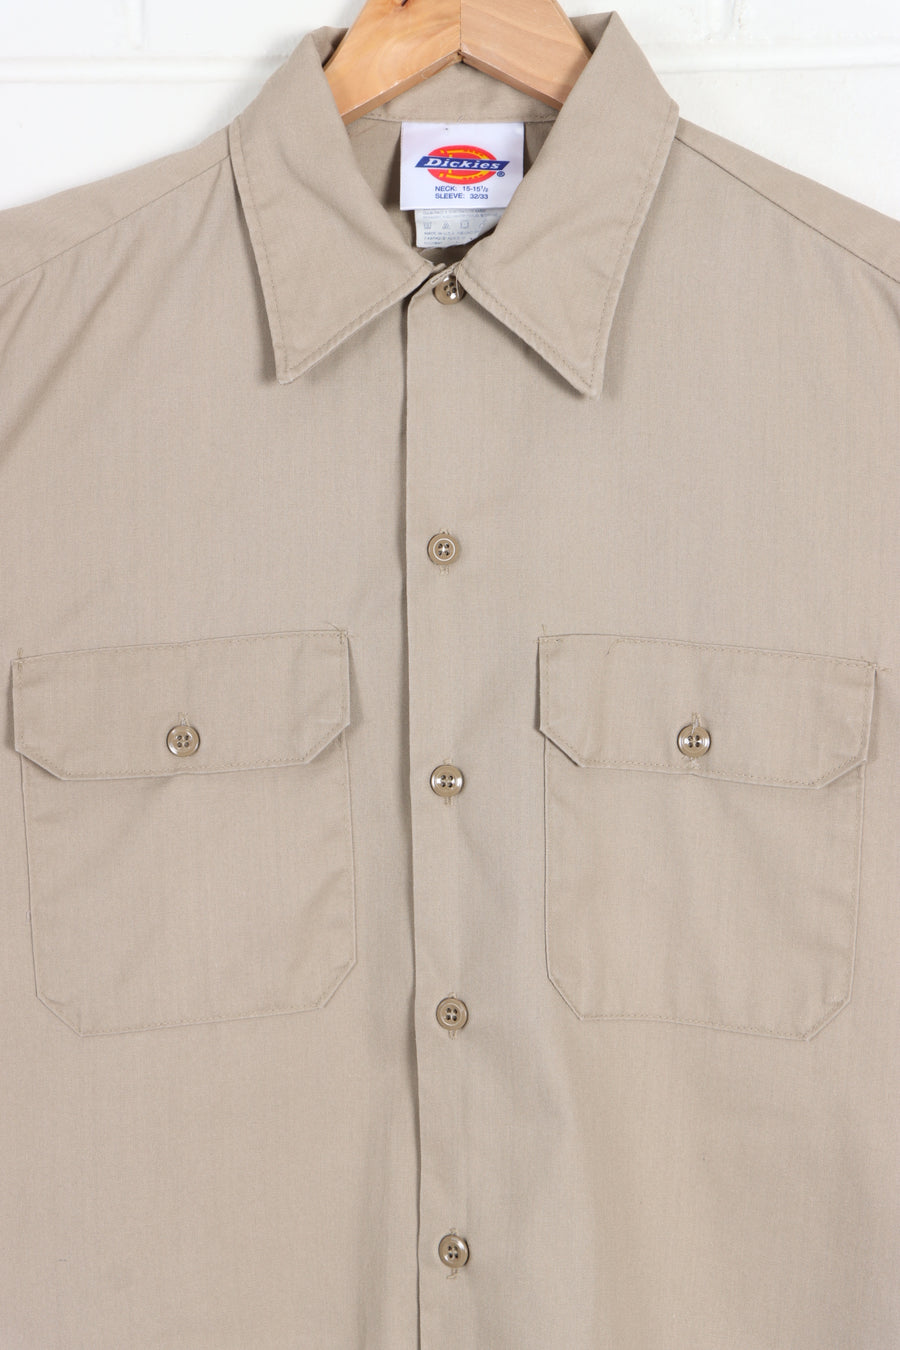 DICKIES Khaki Long Sleeve Utility Work Shirt USA Made (L) - Vintage Sole Melbourne